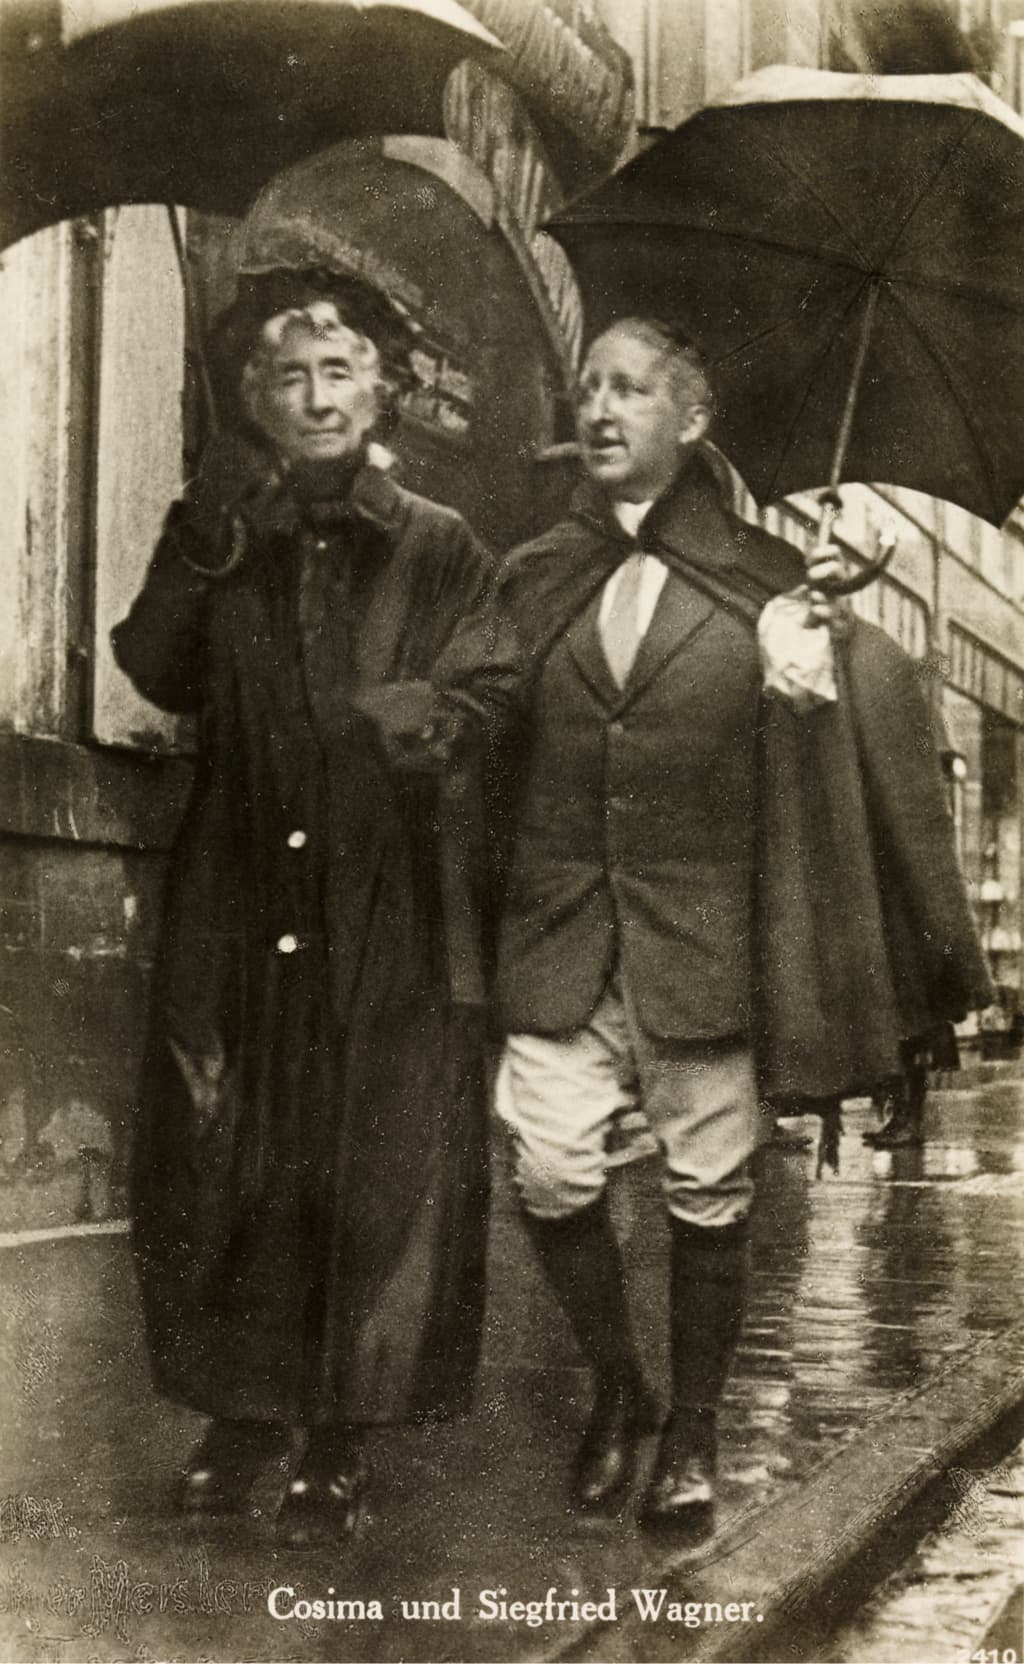 Cosima and Siegfried Wagner, c. 1929